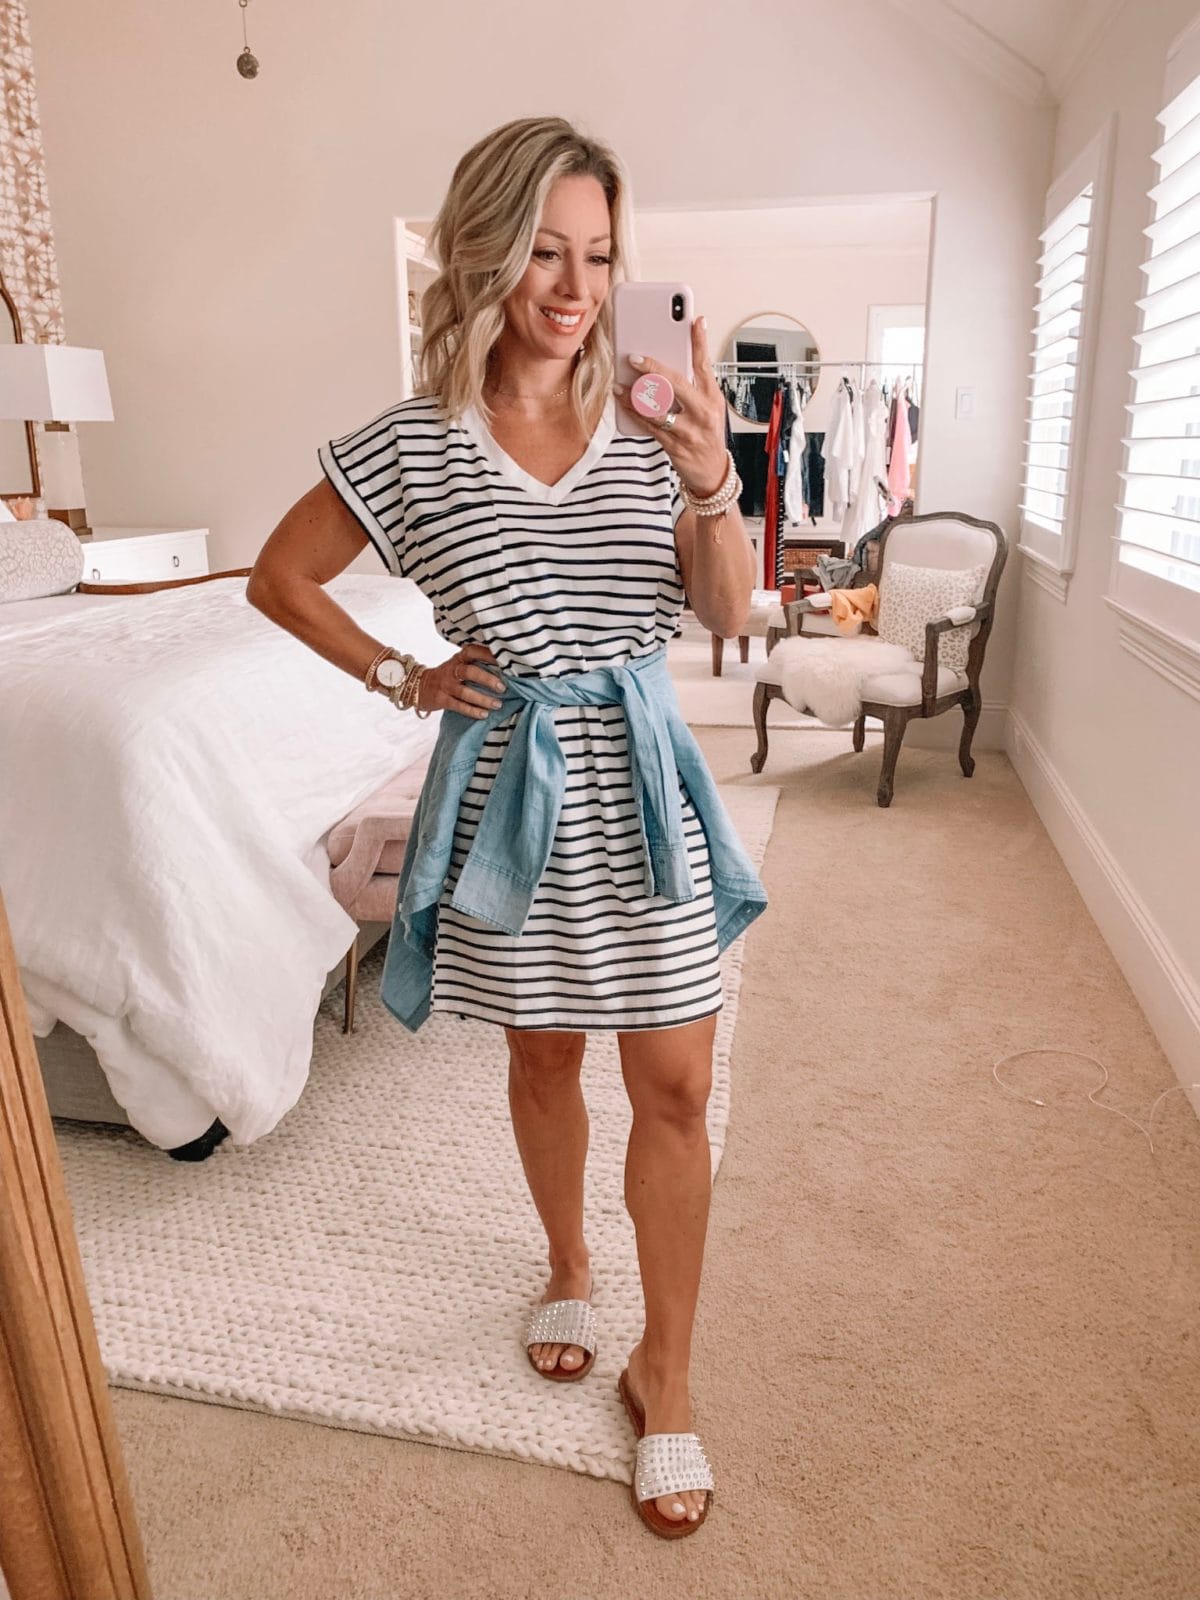 Amazon Fashion Haul - Stripe T-Shirt Dress with studded Sandals